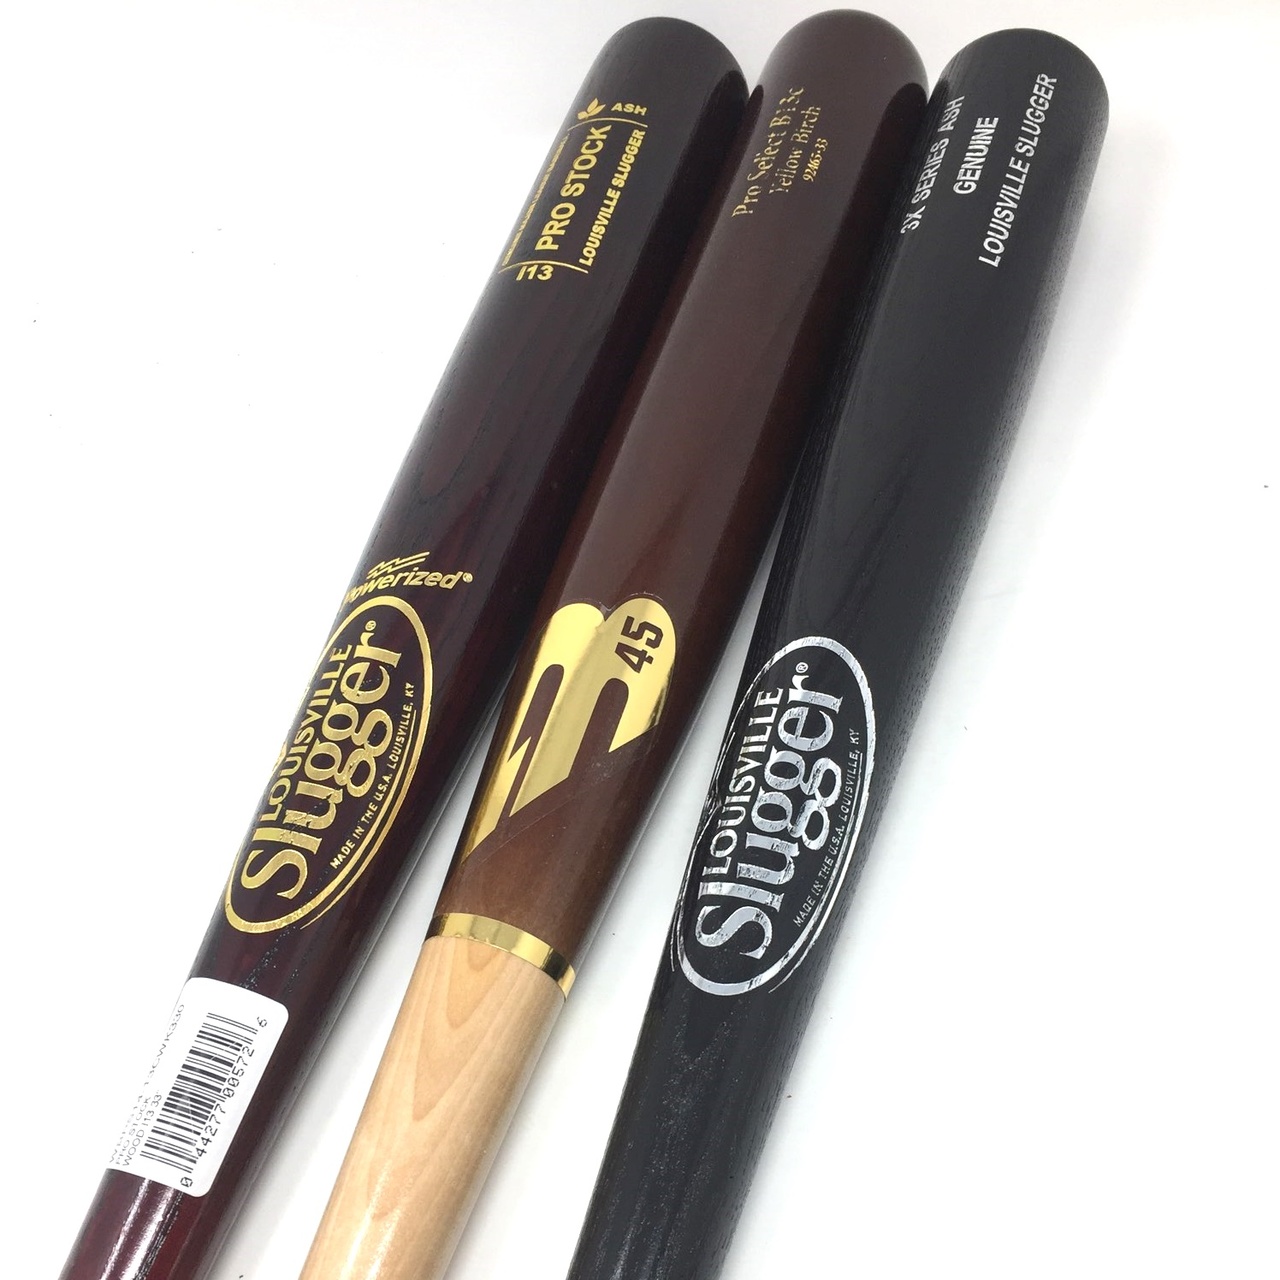 wood-baseball-bat-pack-33-inch-3-bats-b45-birch-maple-ash BATPACK-0018  Does not apply 33 inch wood bats. 3 Bats in Total. 1 B45 Yellow